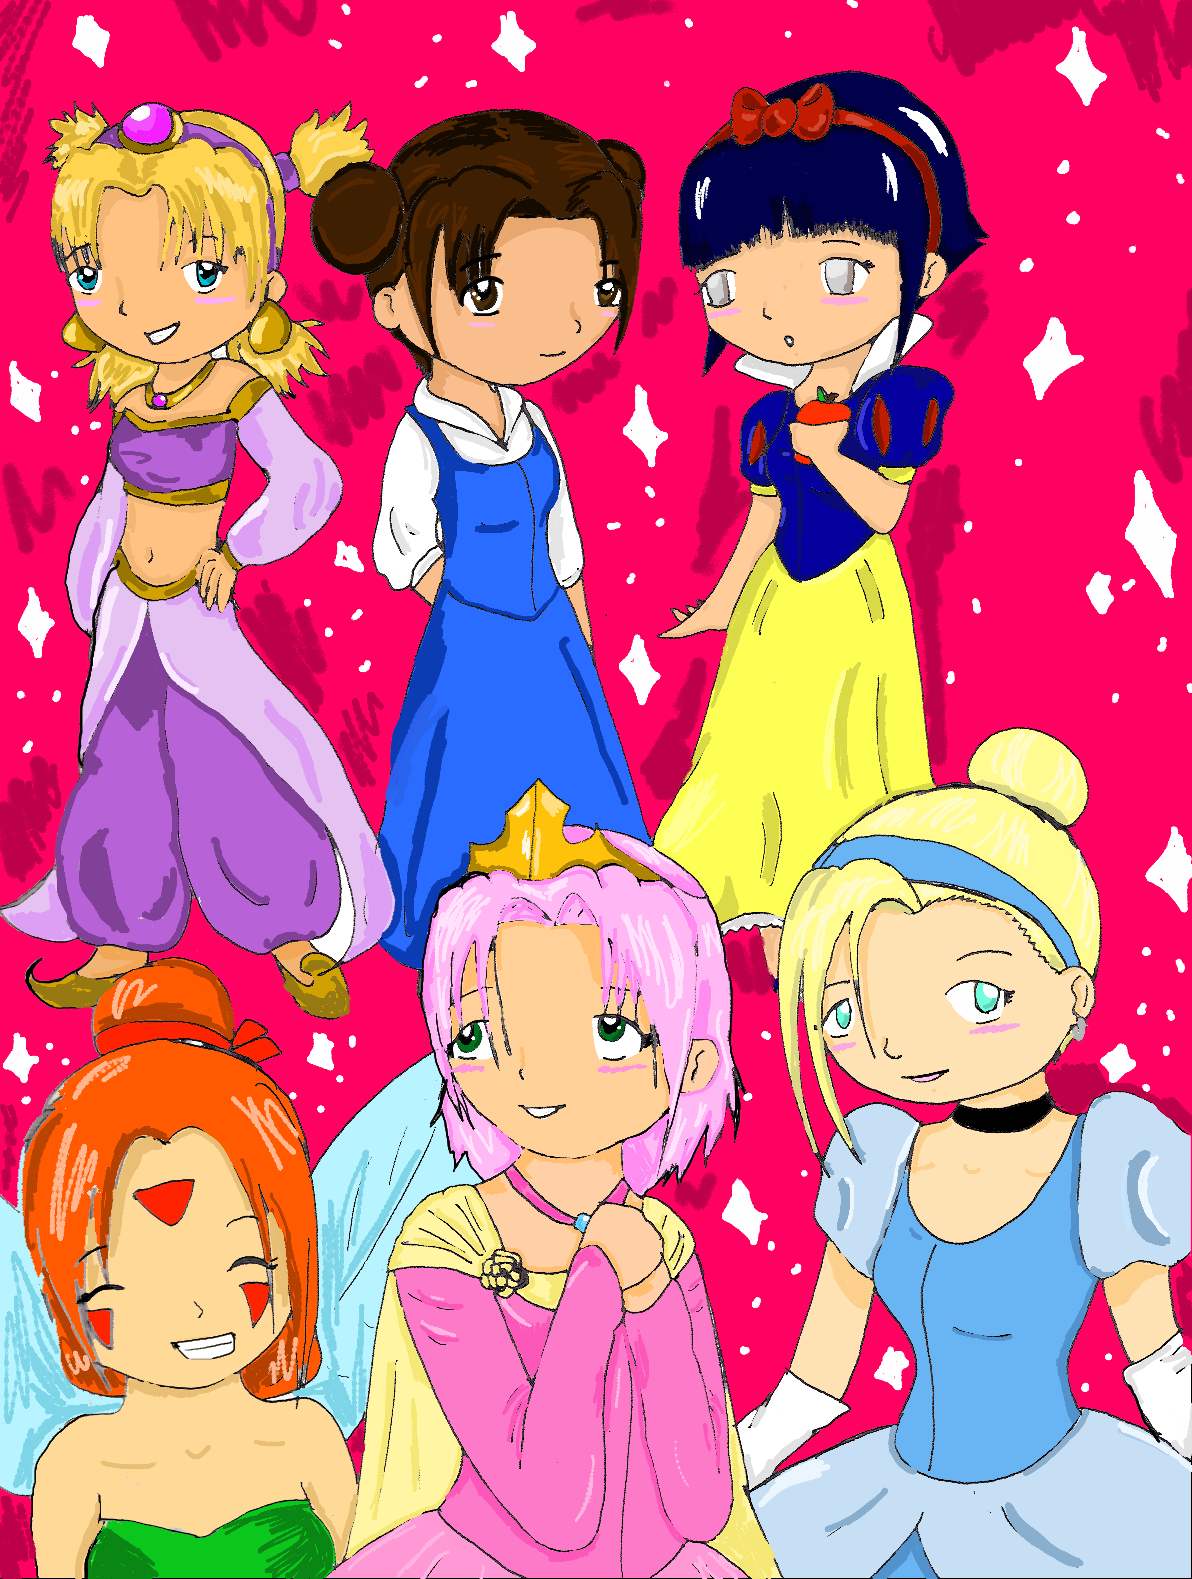 Naruto princesses by All4art